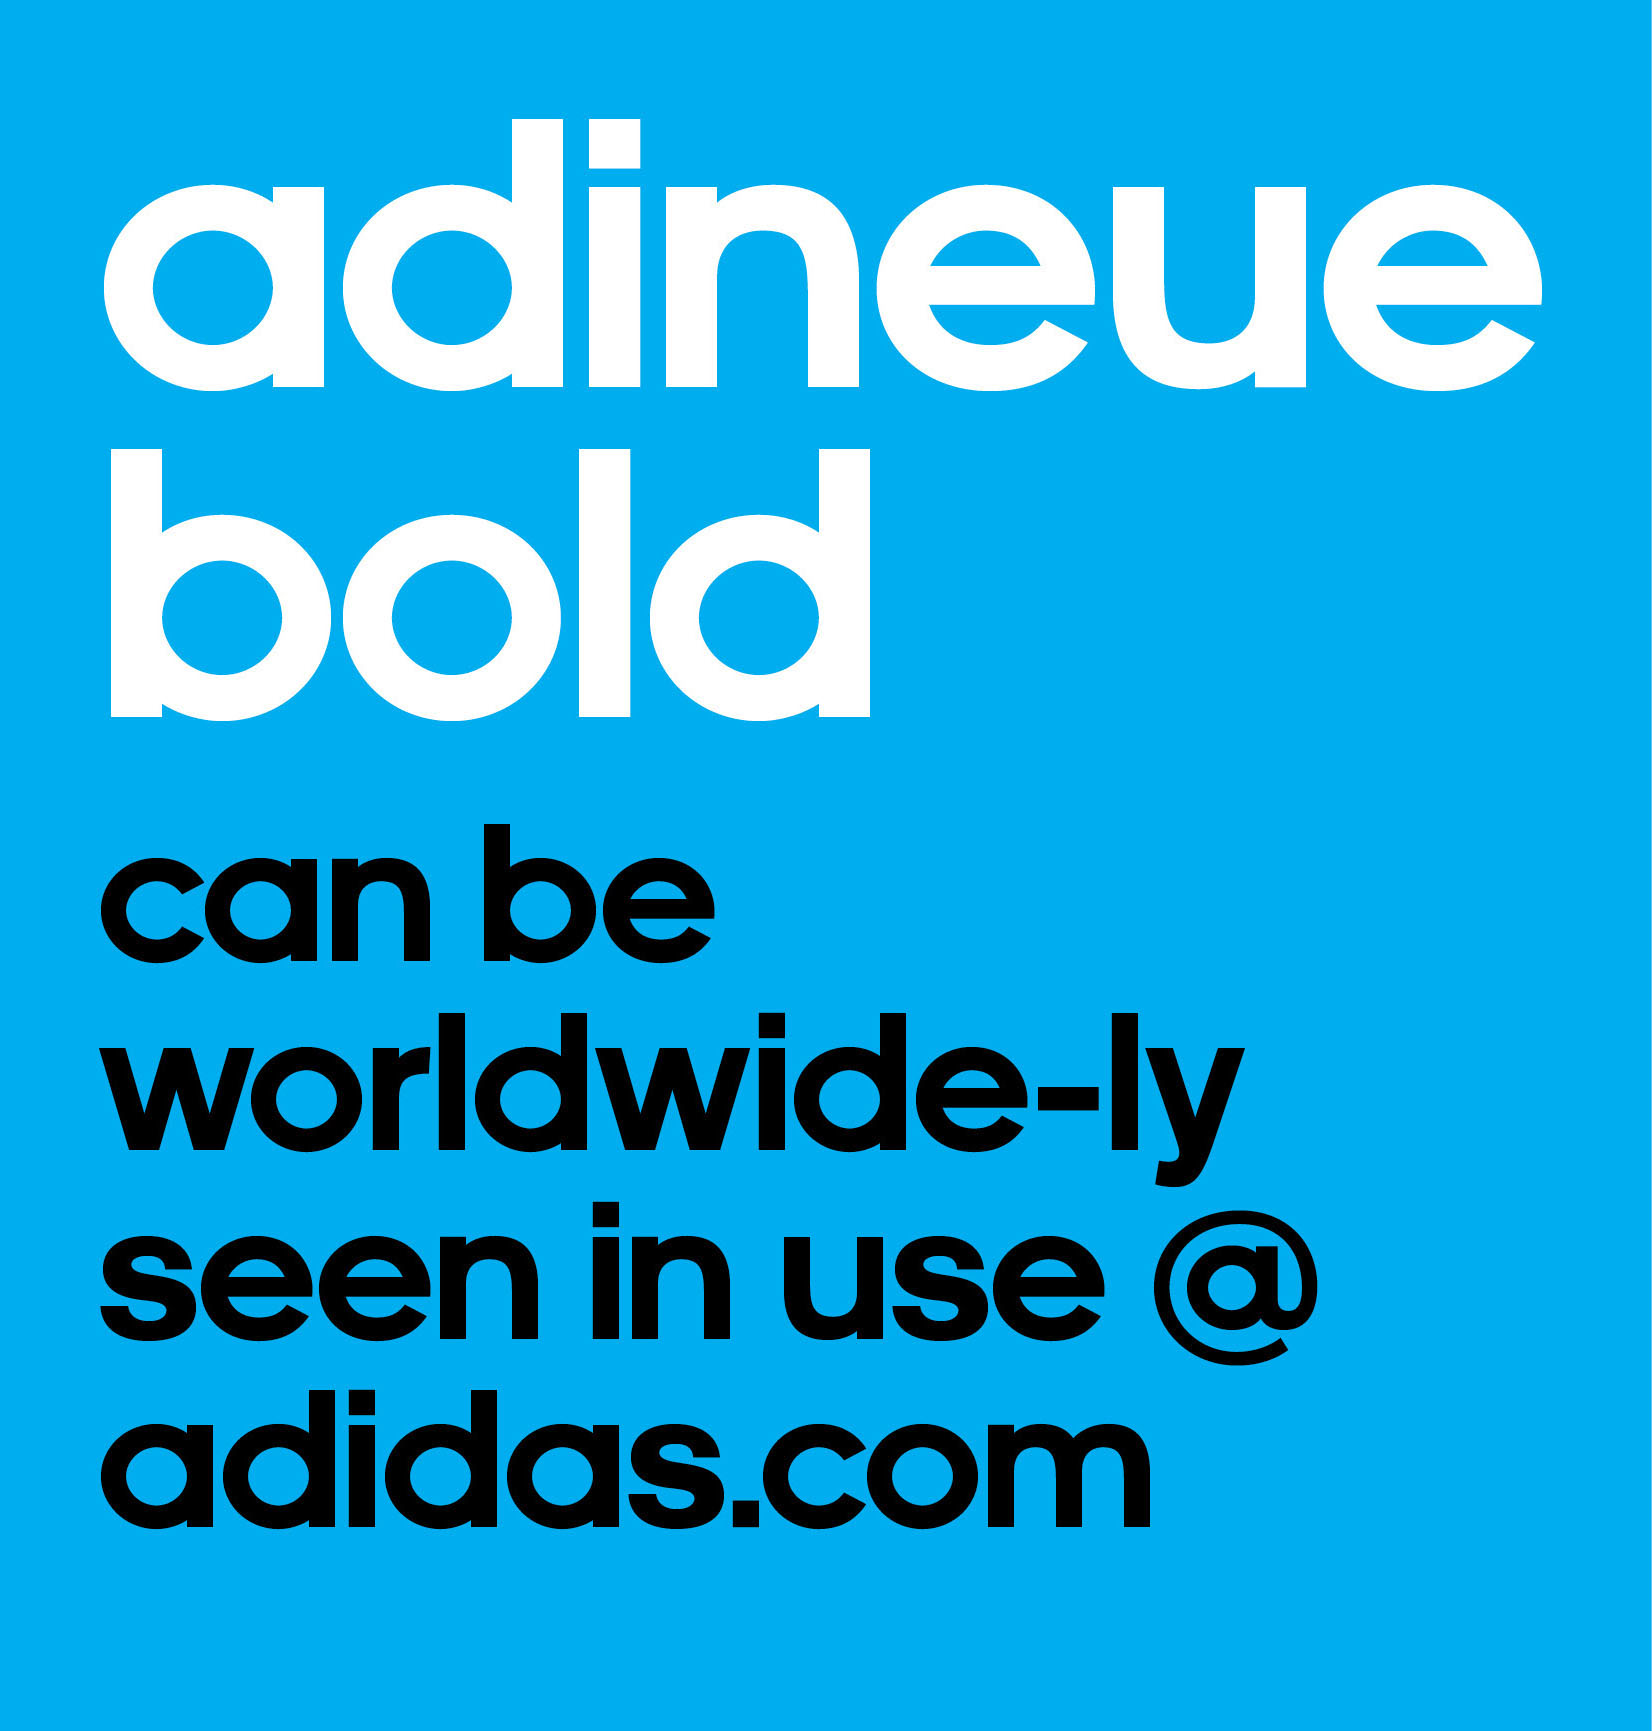 adidas free font